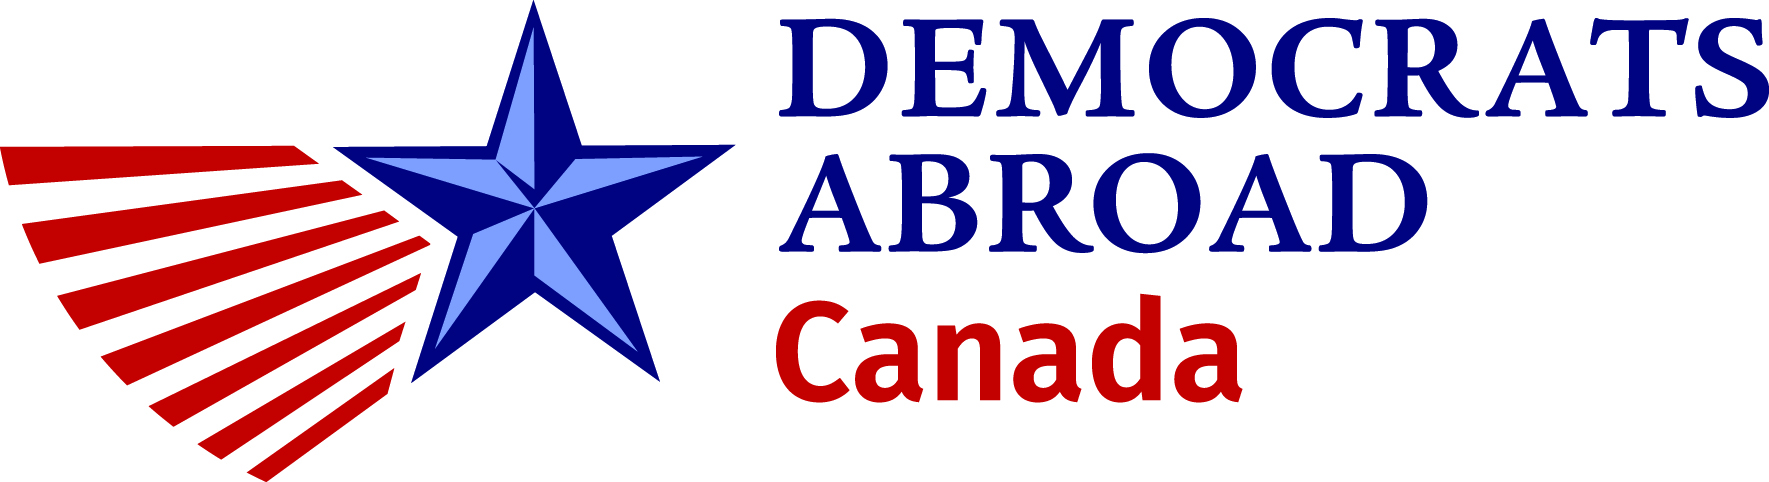 Democrats Abroad Canada logo